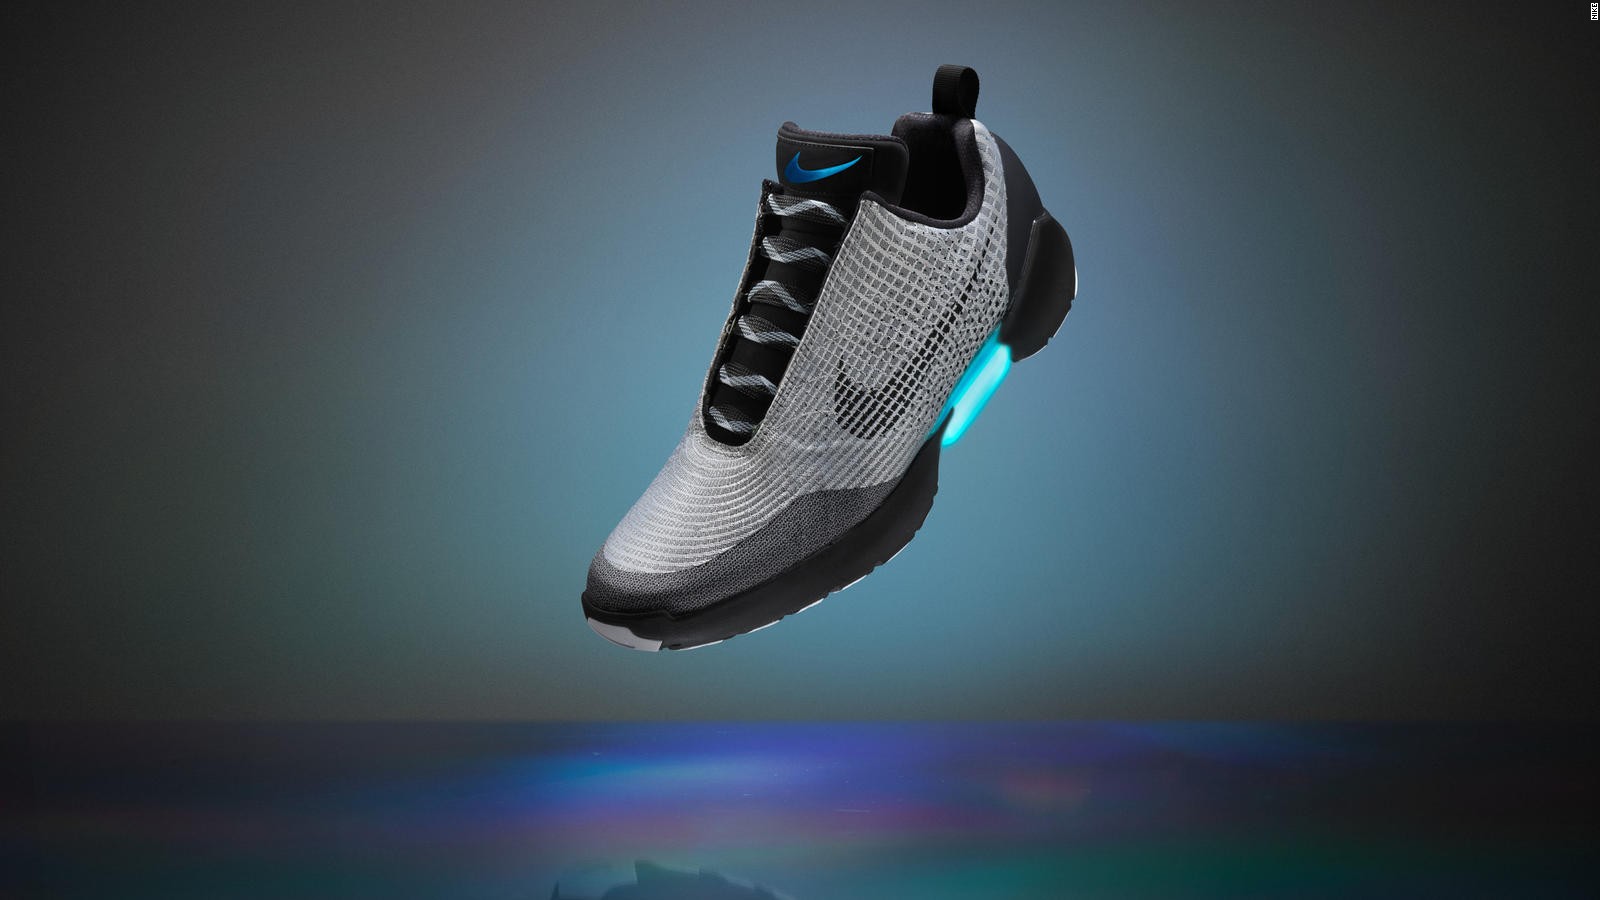 loco barbilla Comida Nike lanza zapatos deportivos inteligentes | Video | CNN